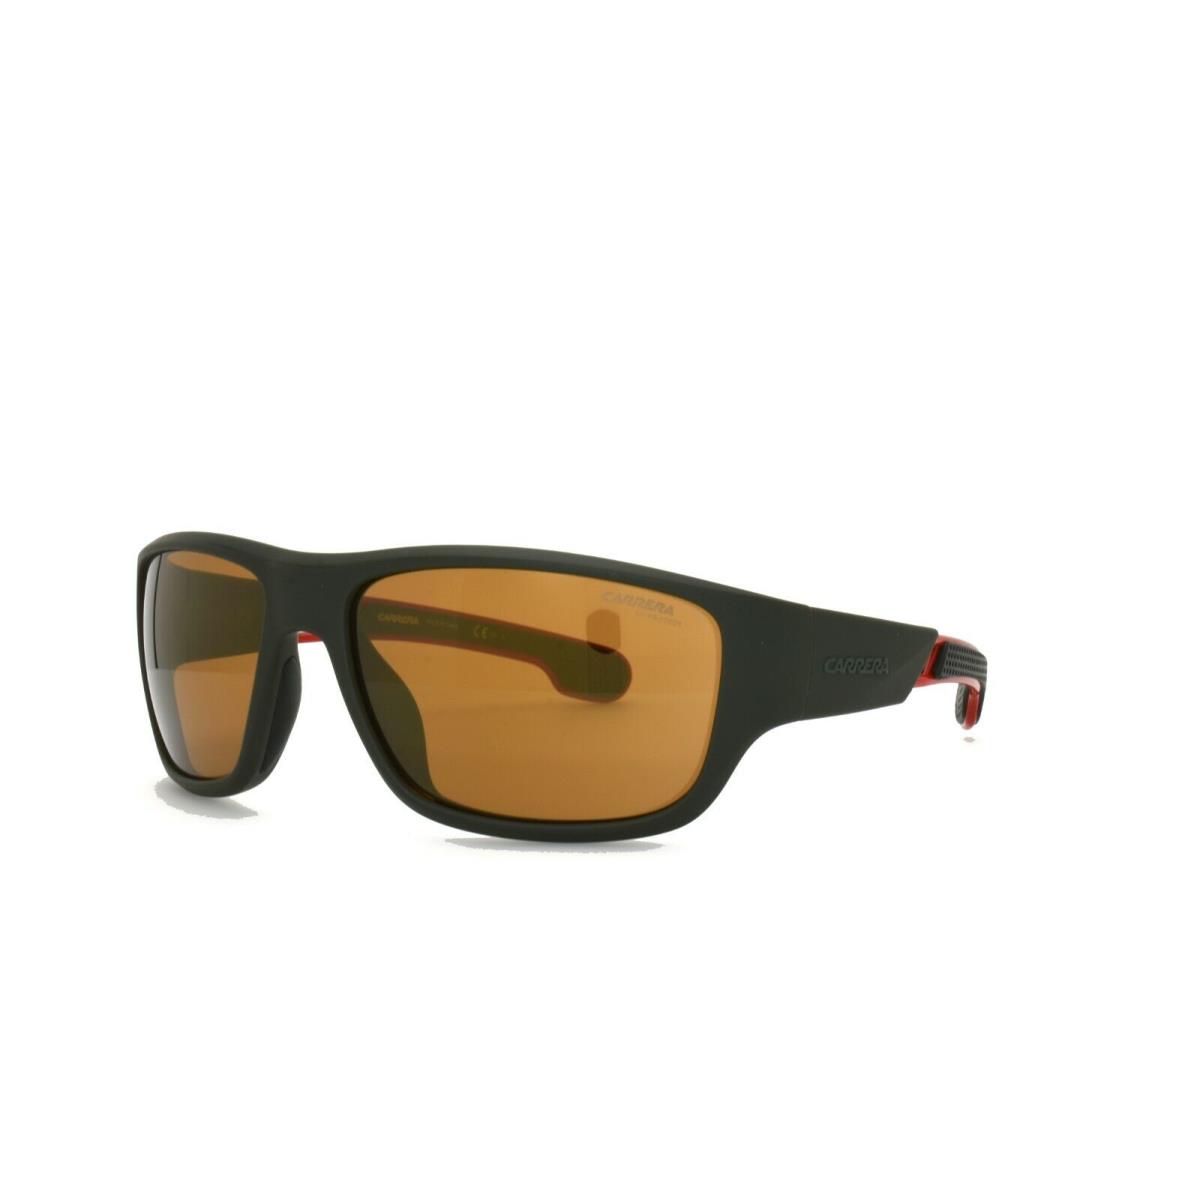 NC Carrera Sunglasses Military Green Brown no Case 4008S Dld K1